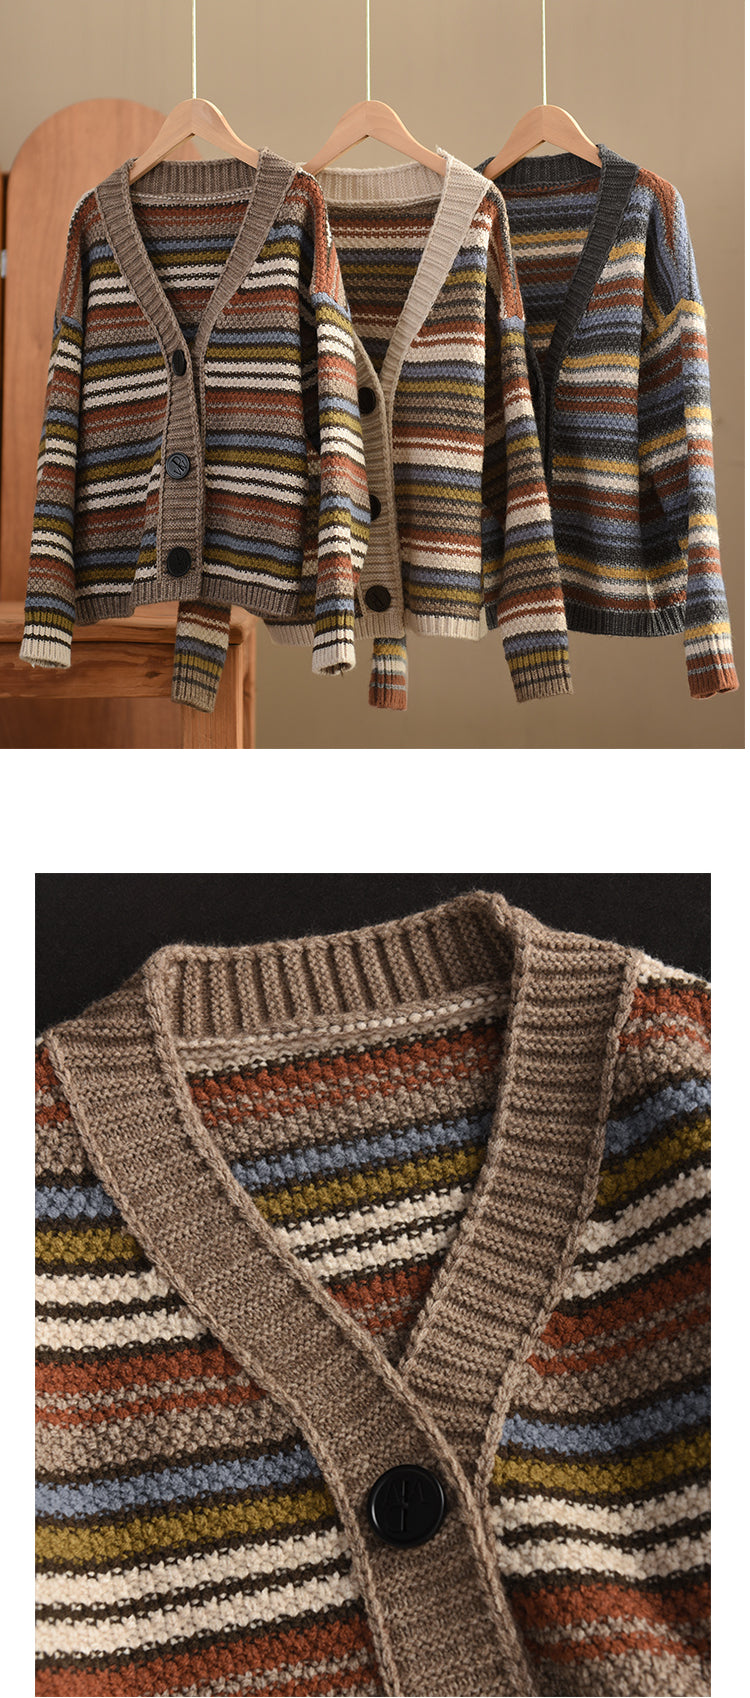 Vintage Heavy Industry Jacquard Knit Warm Sweater Jacket